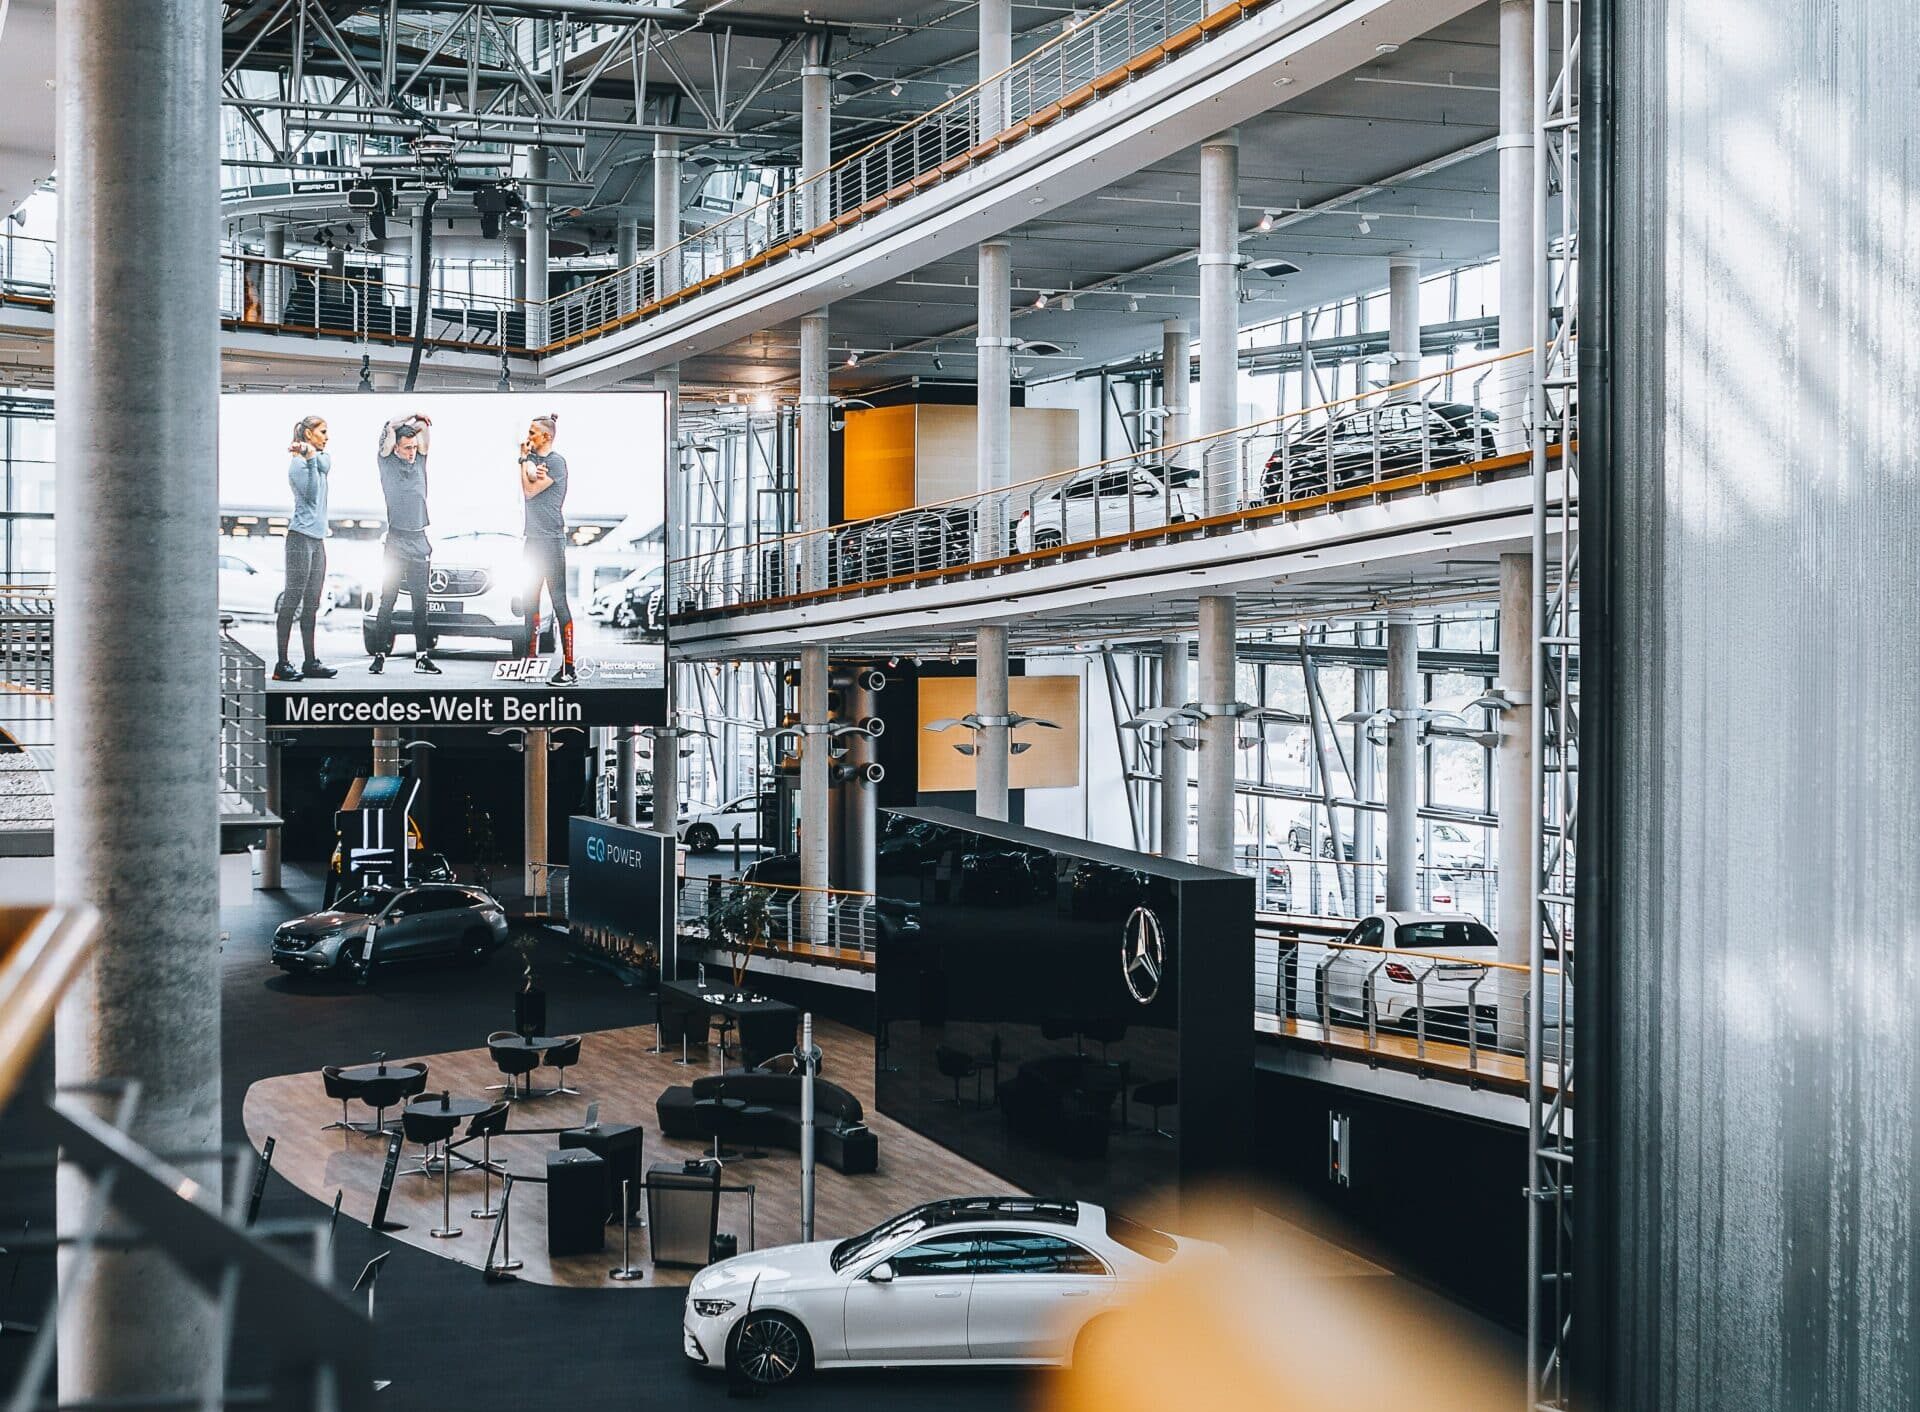 Mercedes Benz factory, Berlin